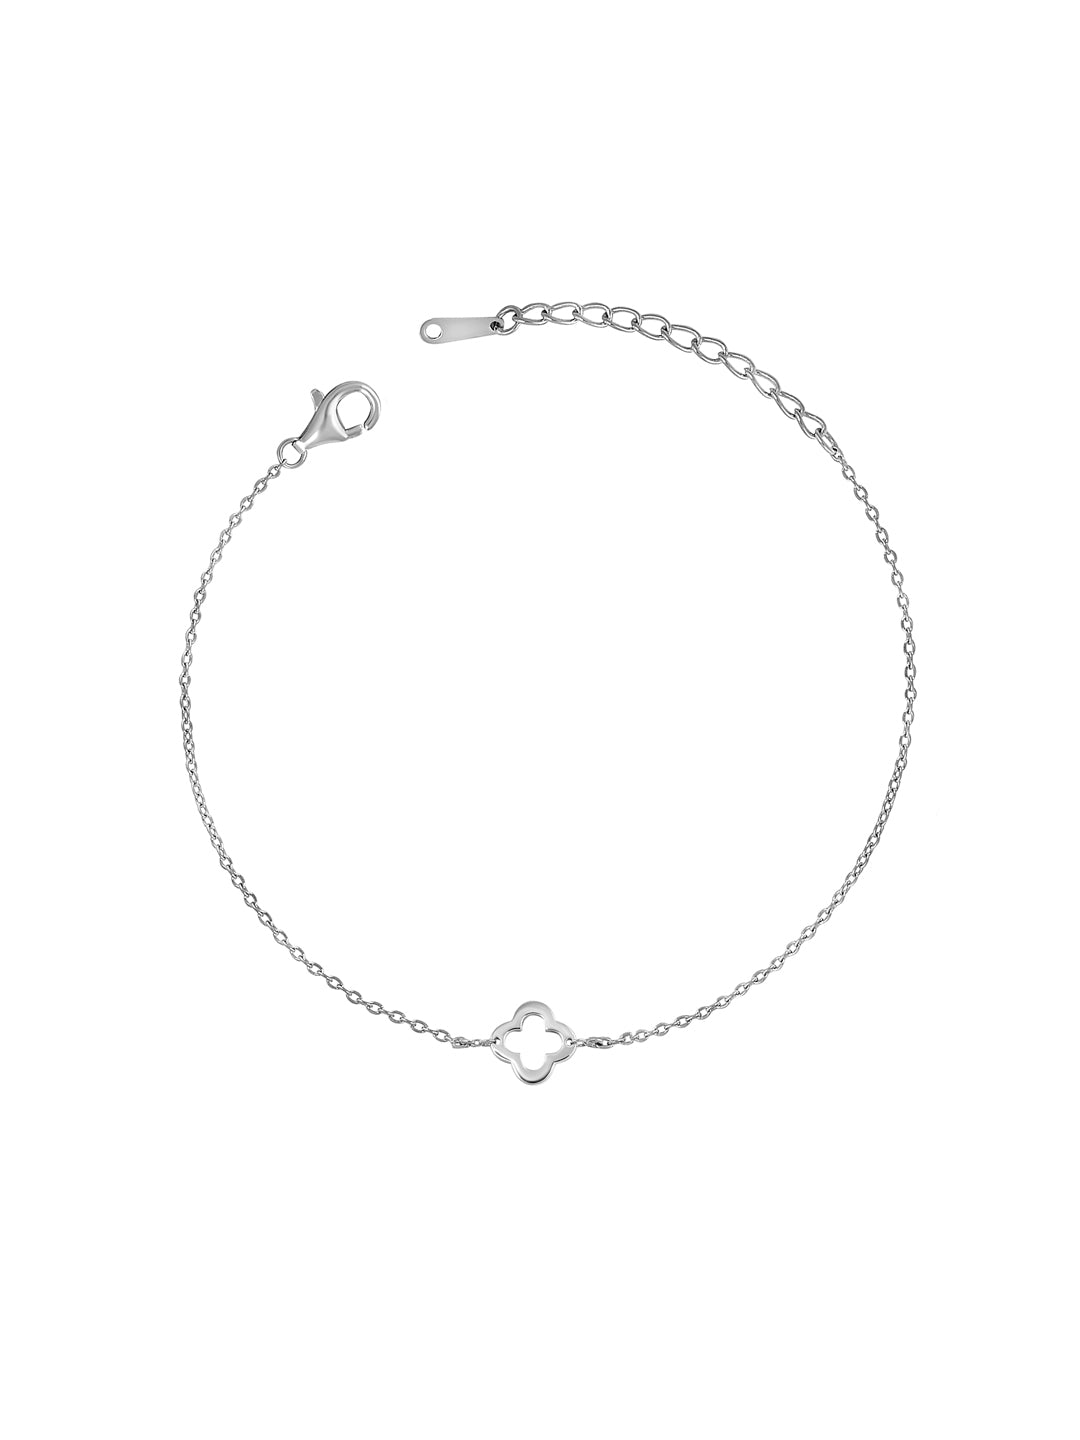 Buy SSKR Black and White Beads Thread based Nazar Baby Bracelet Nazariya -  Pack of 2 Pairs Inside at Amazon.in